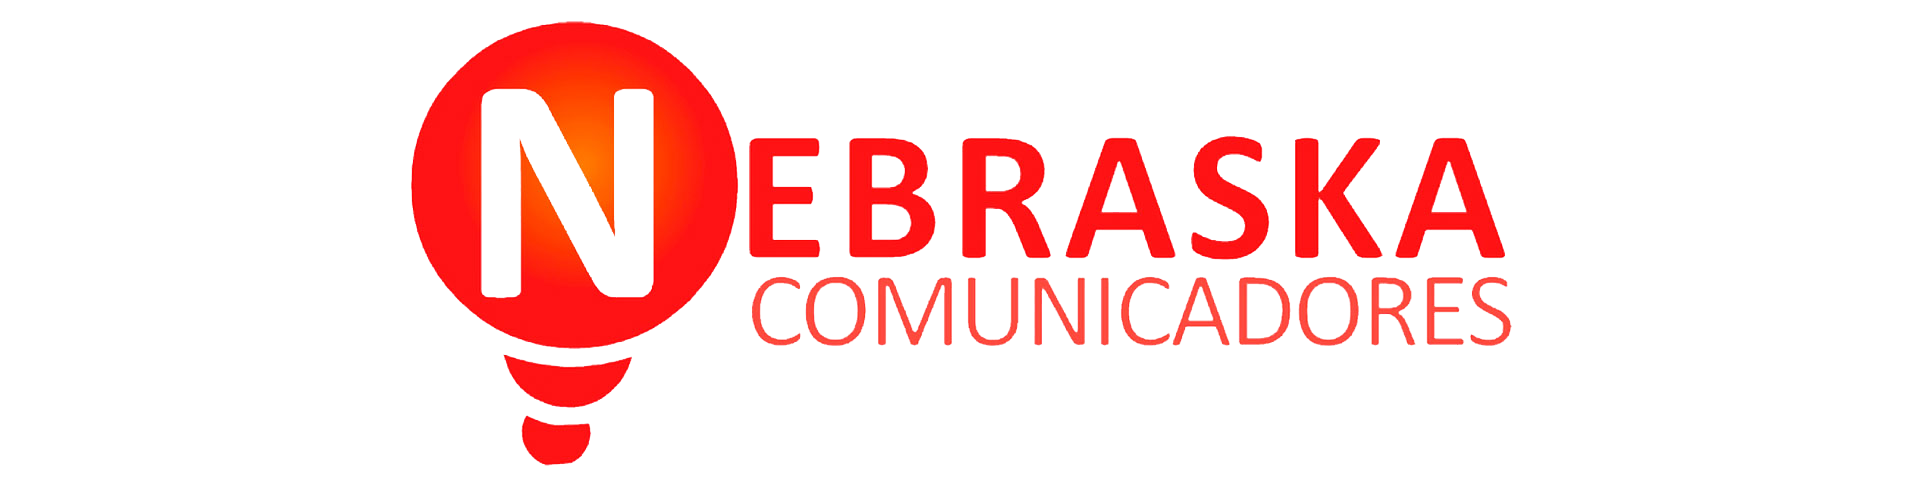 Nebraska Comunicadores - Agencia de Relaciones Públicas